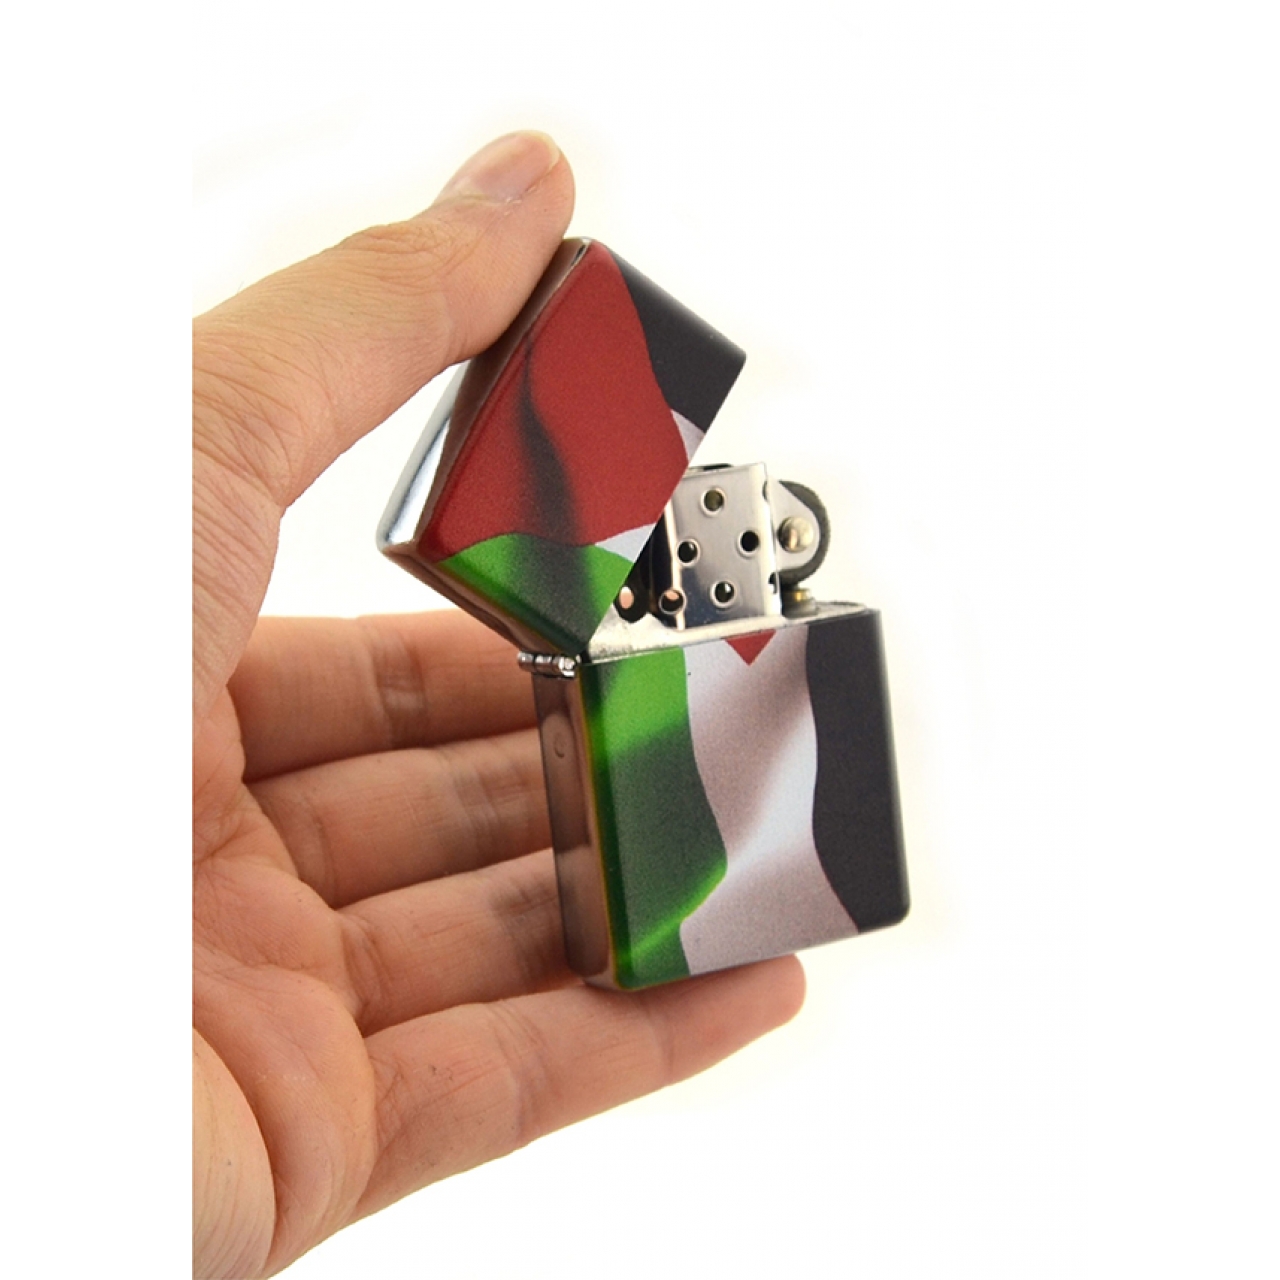 Filistin Bayrak 5 li Hediye Seti